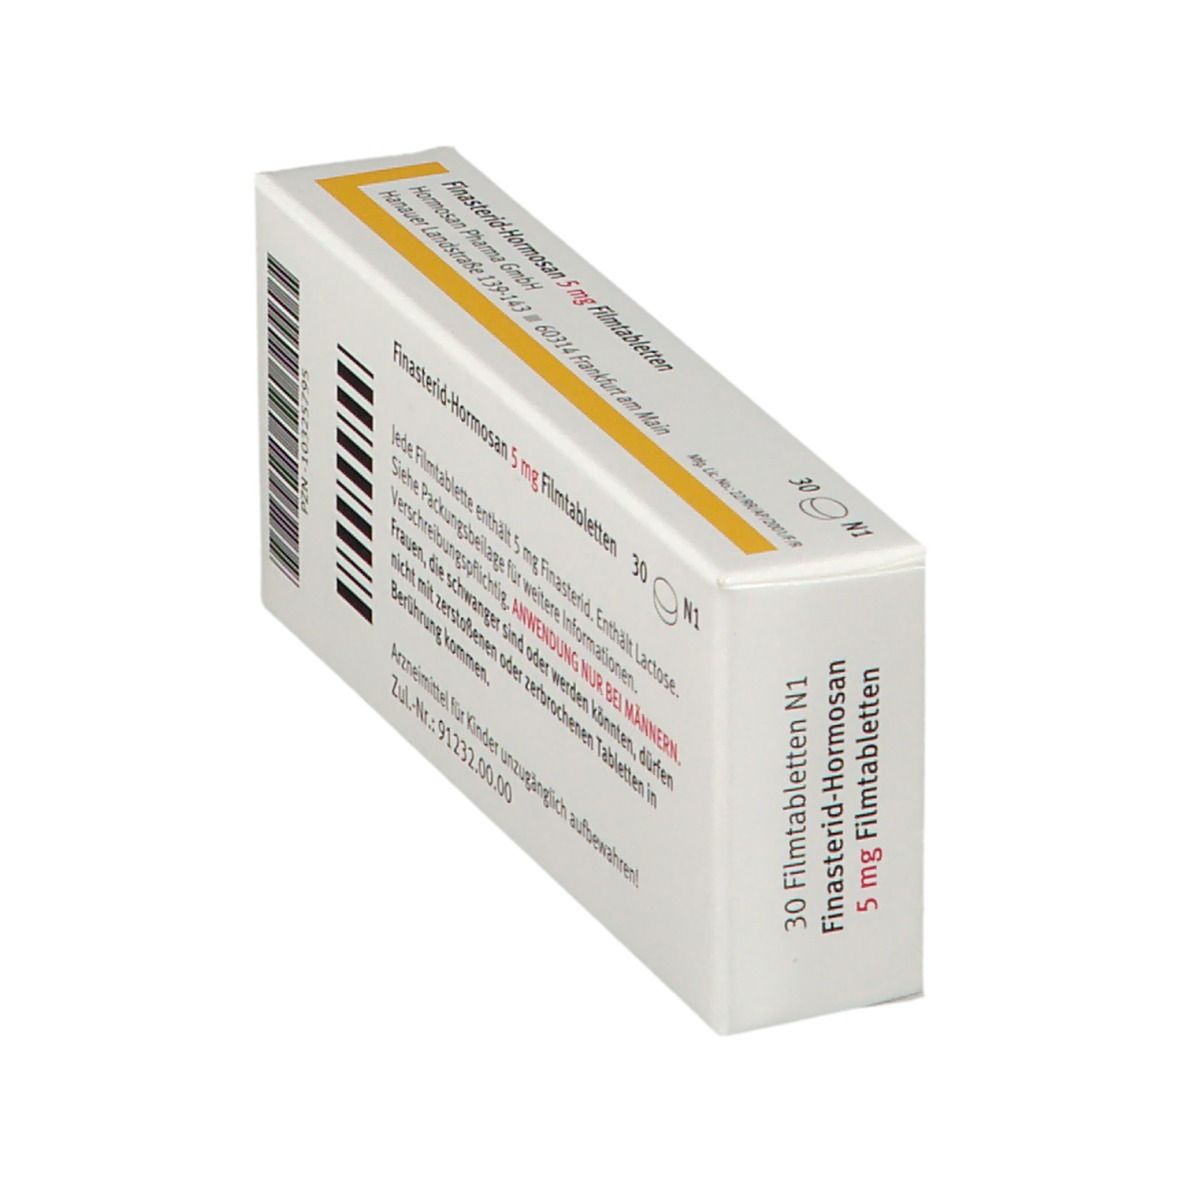 Finasterid-Hormosan 5 mg